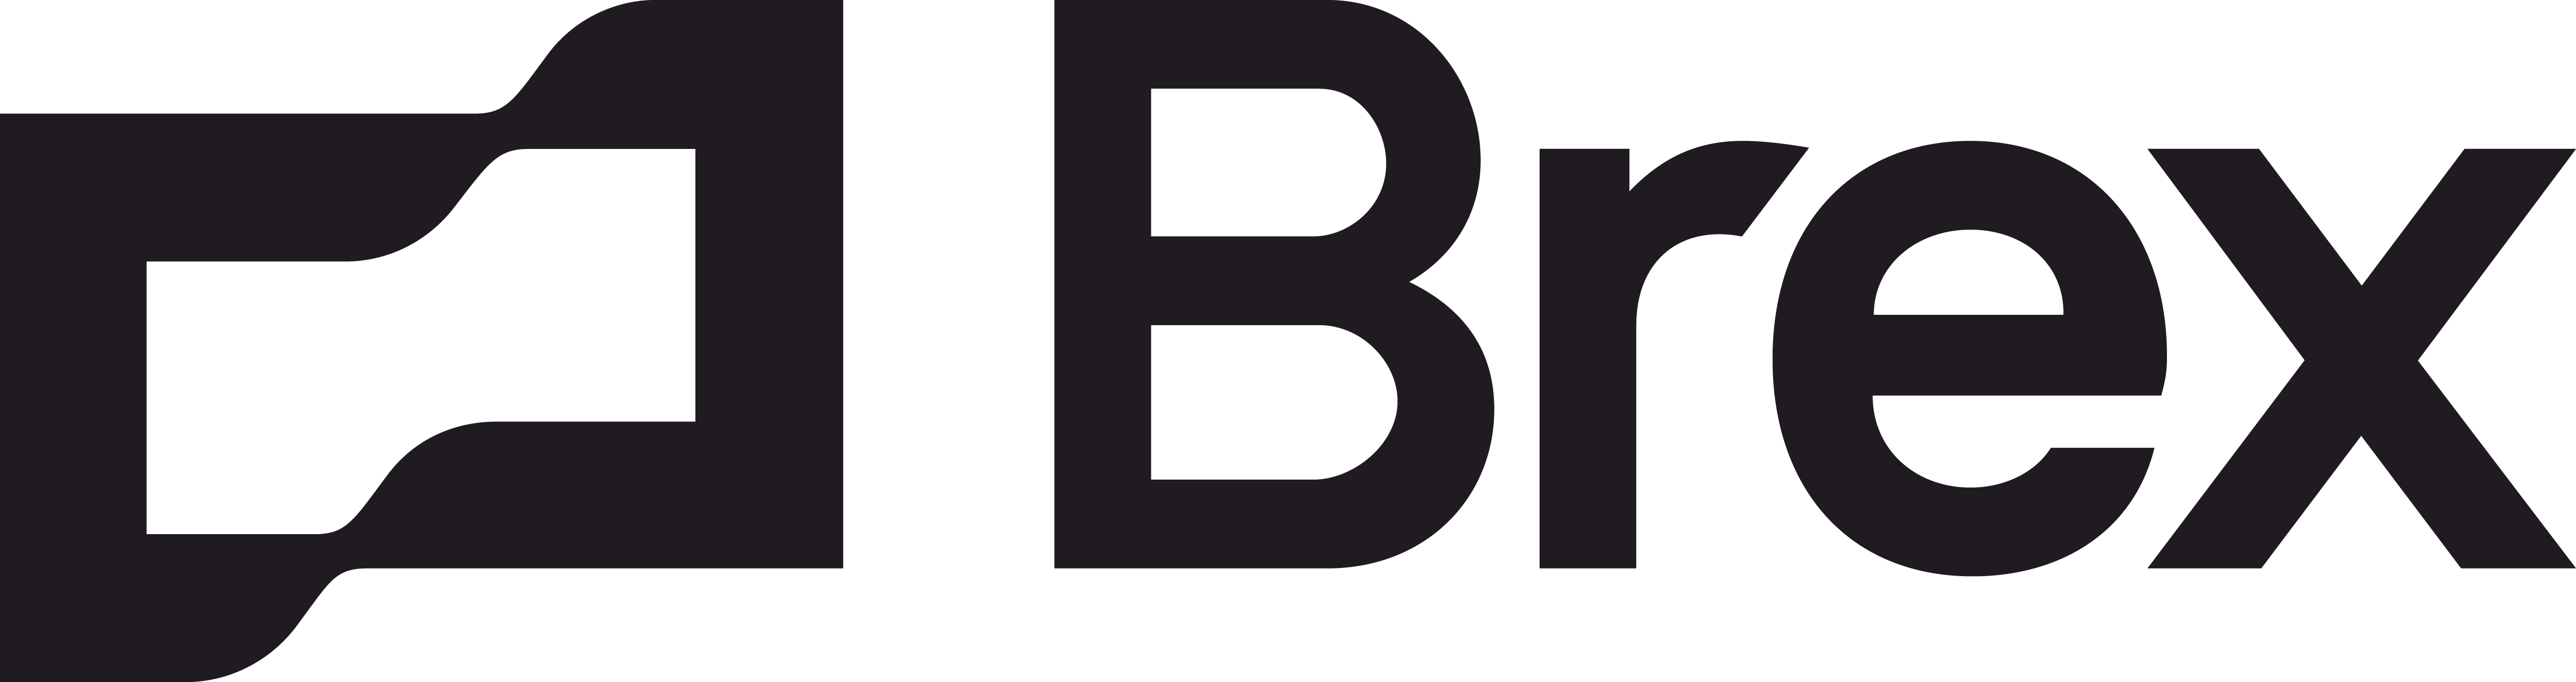 Image of Brex logo